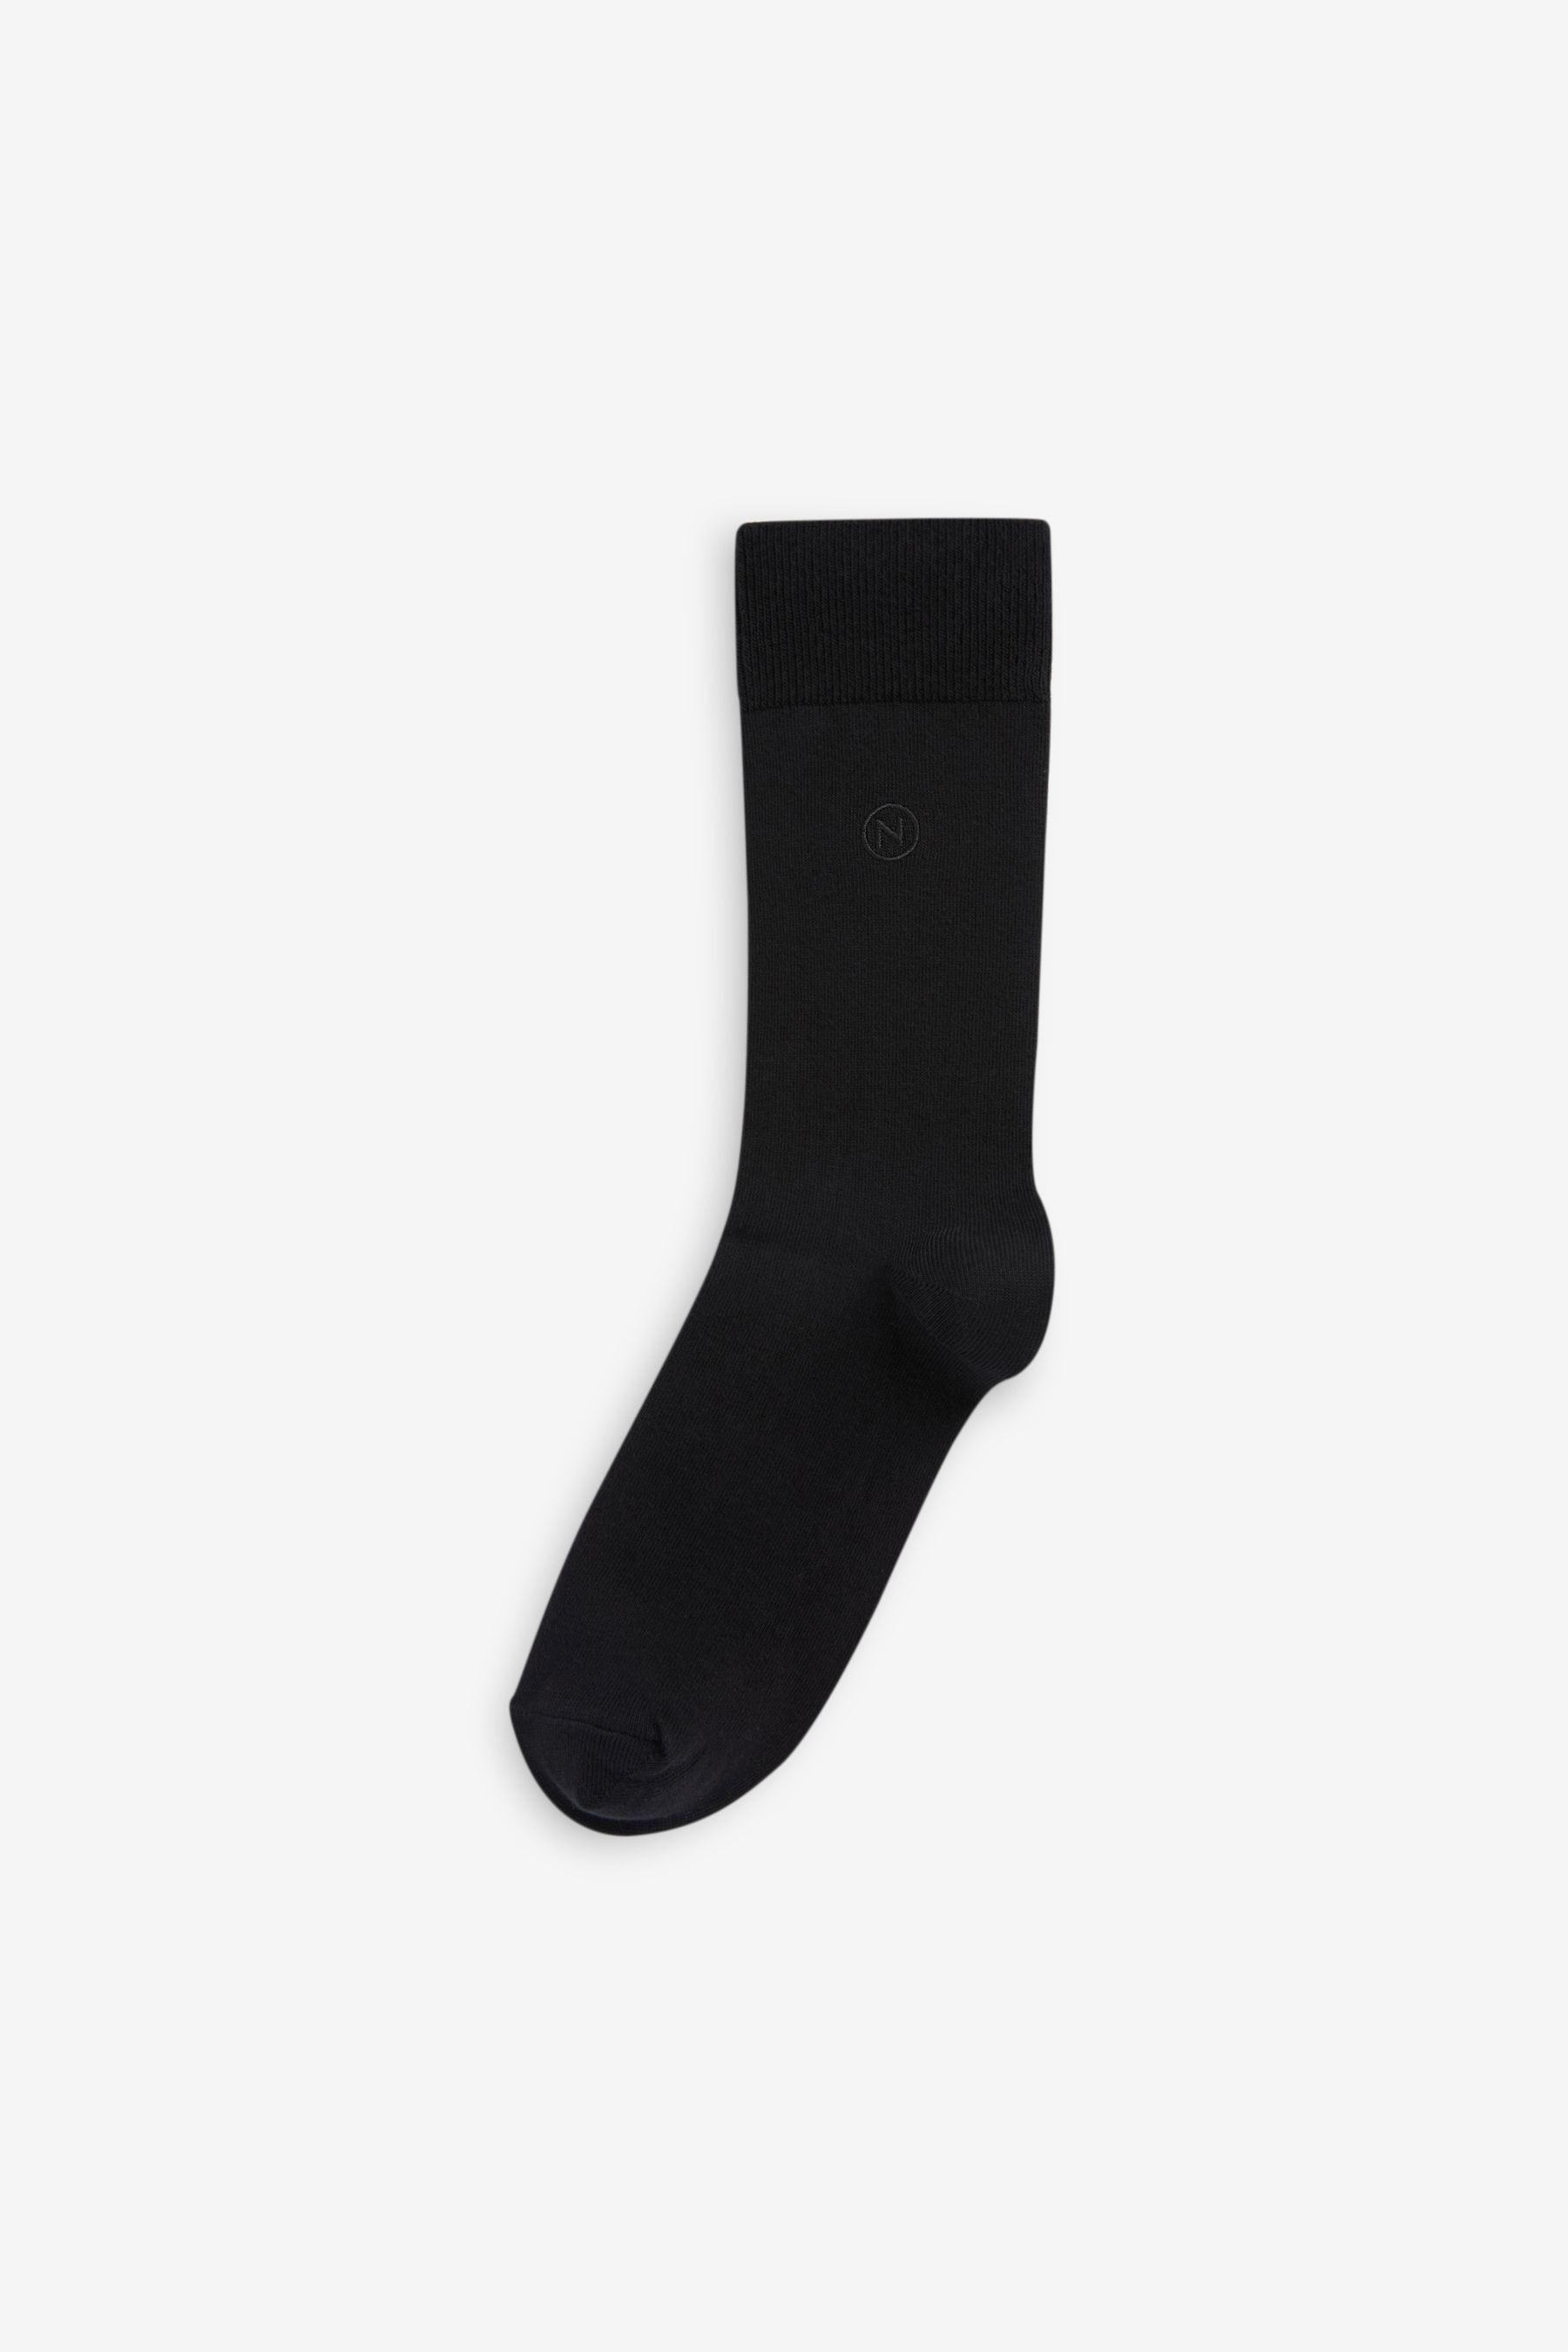 Buy Men's Socks from the Next UK online shop